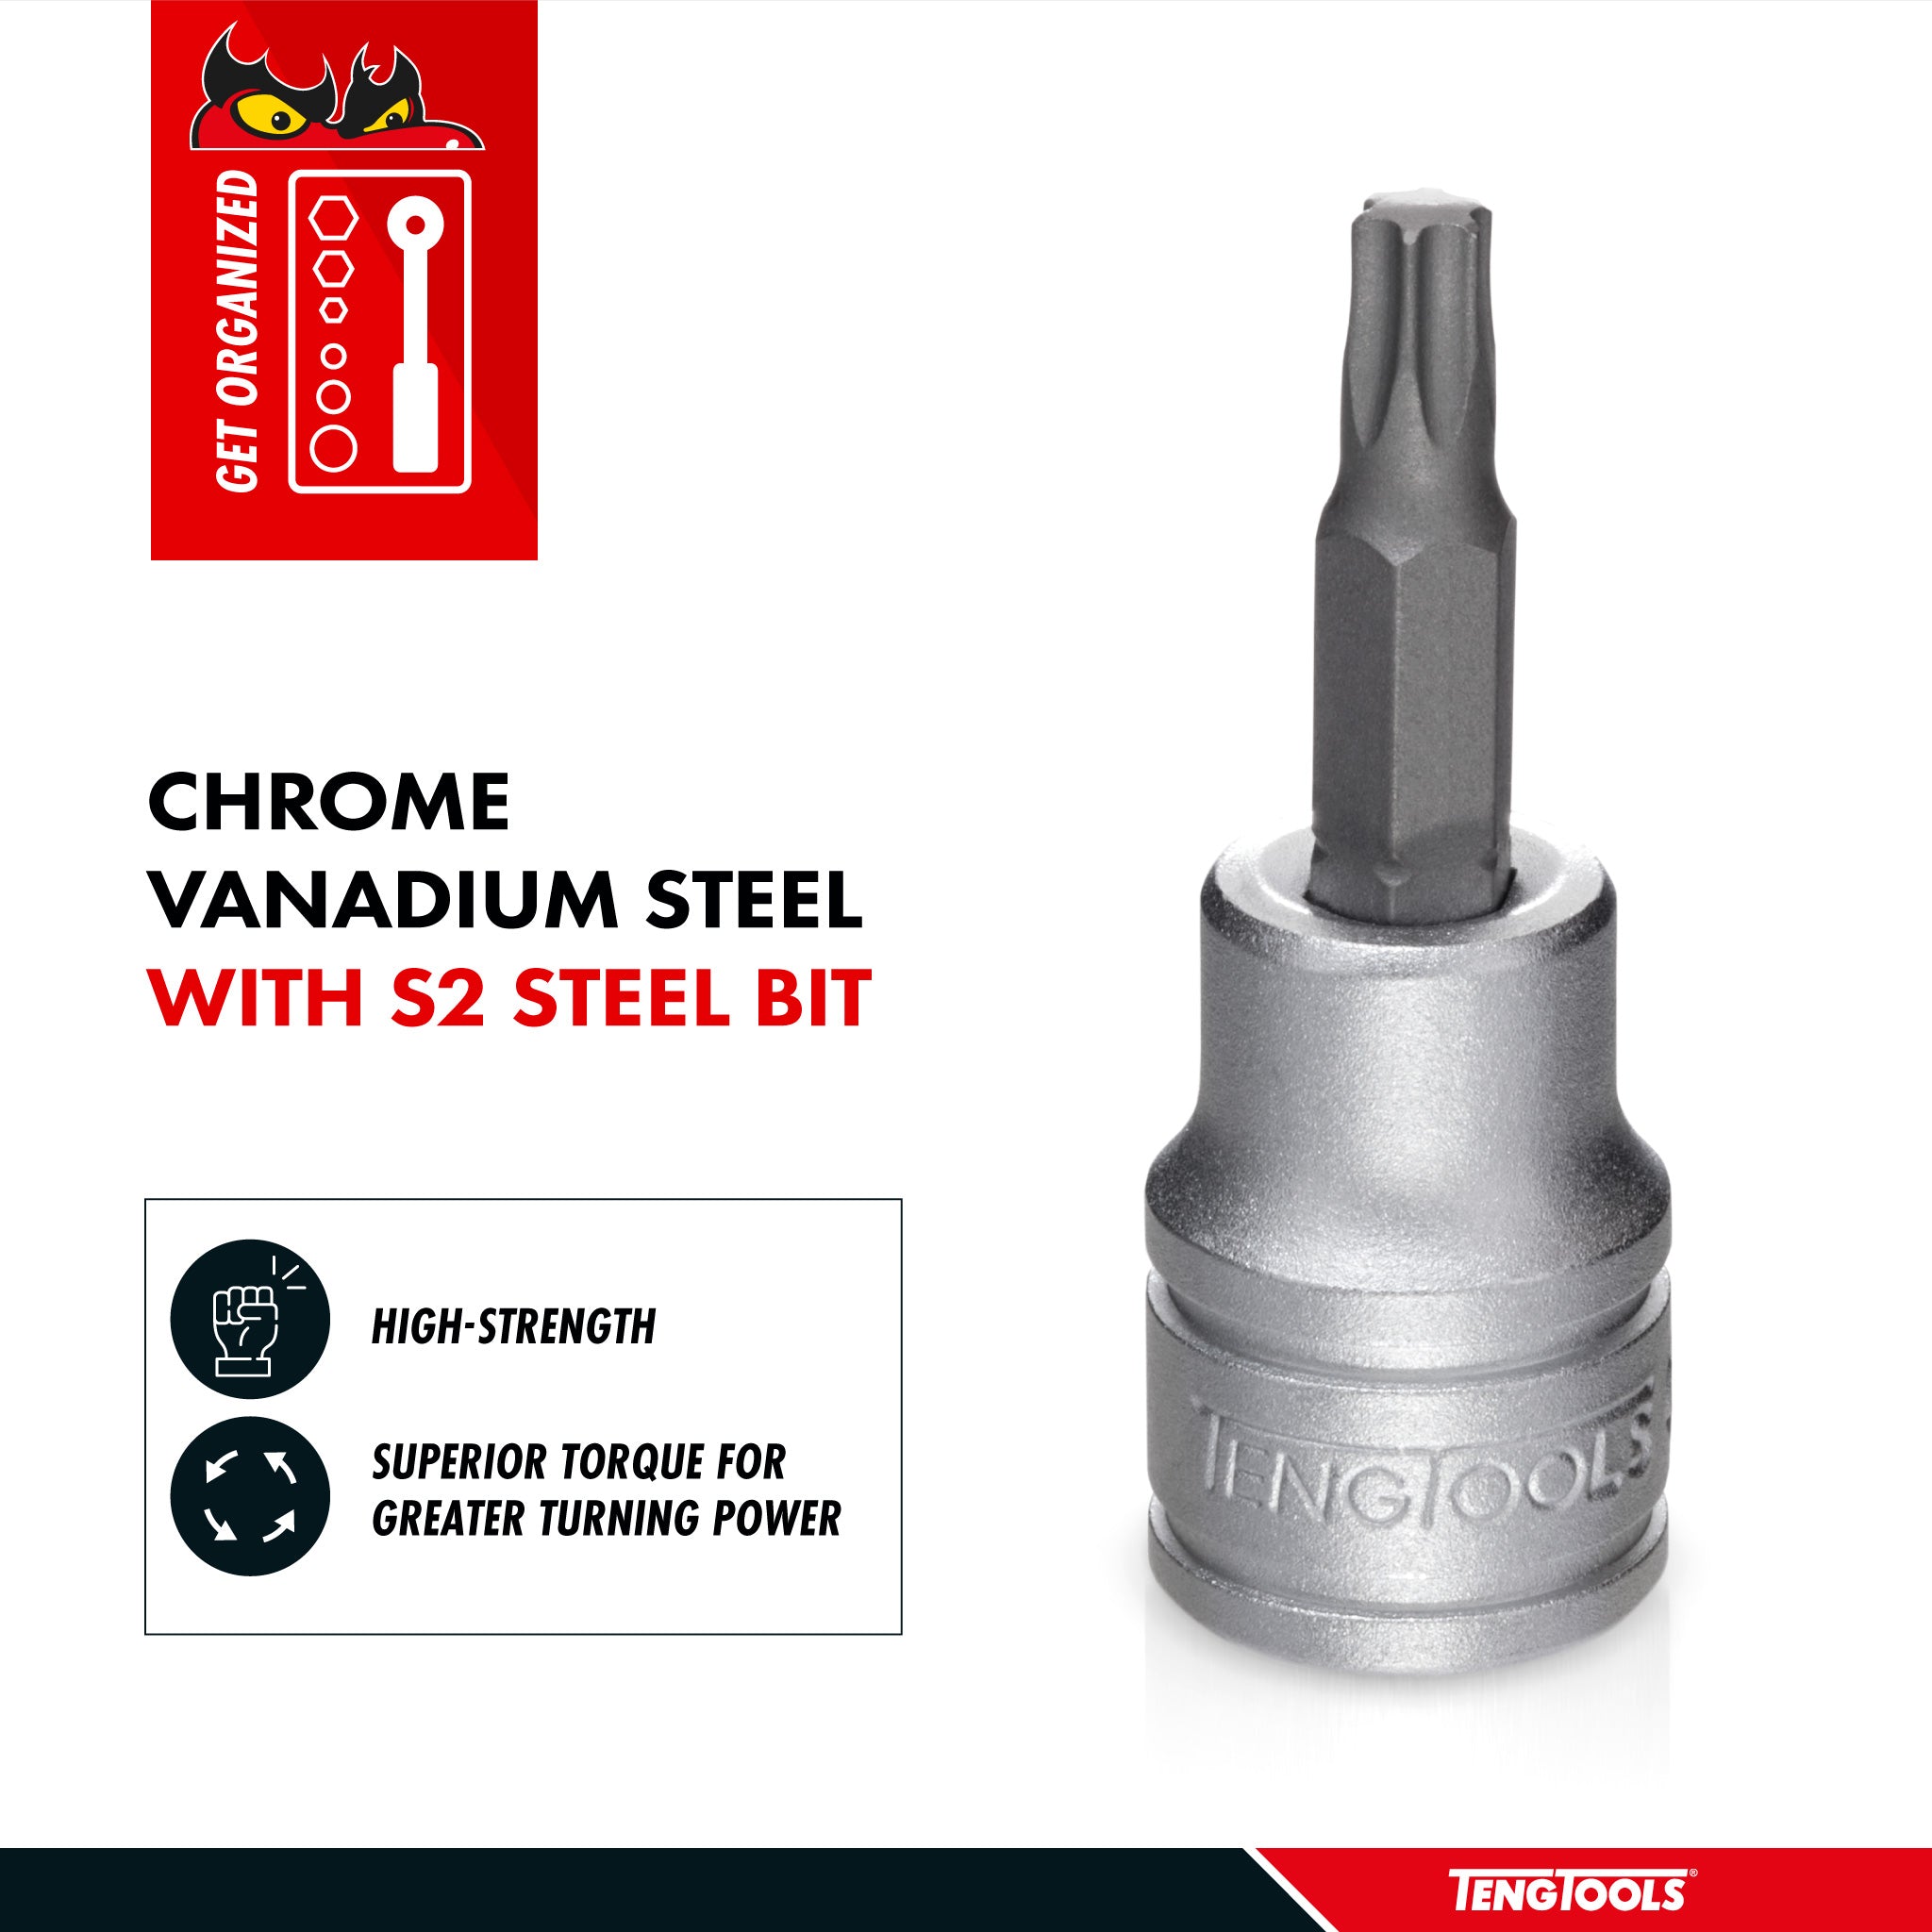 Teng Tools 1/4 Inch Drive Metric Torx TX Chrome Vanadium Sockets - TX10